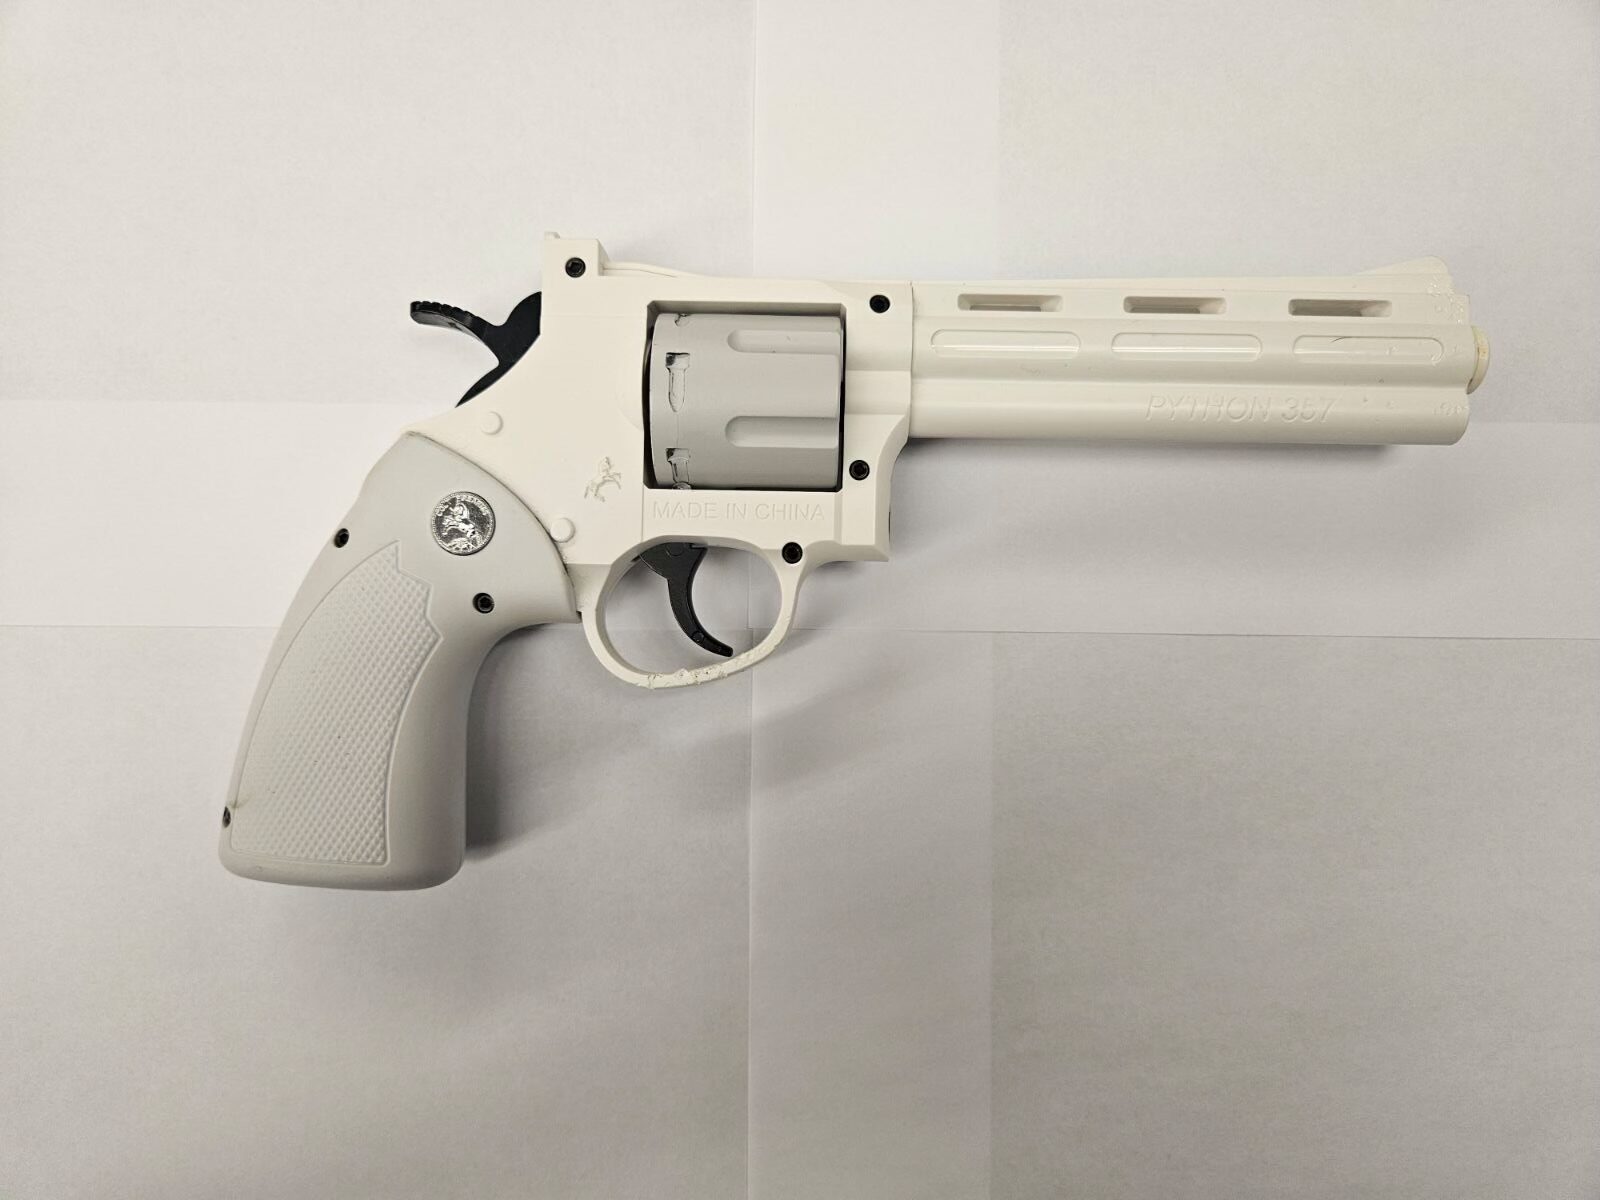 replica-handgun-031824-1-rotated.jpg